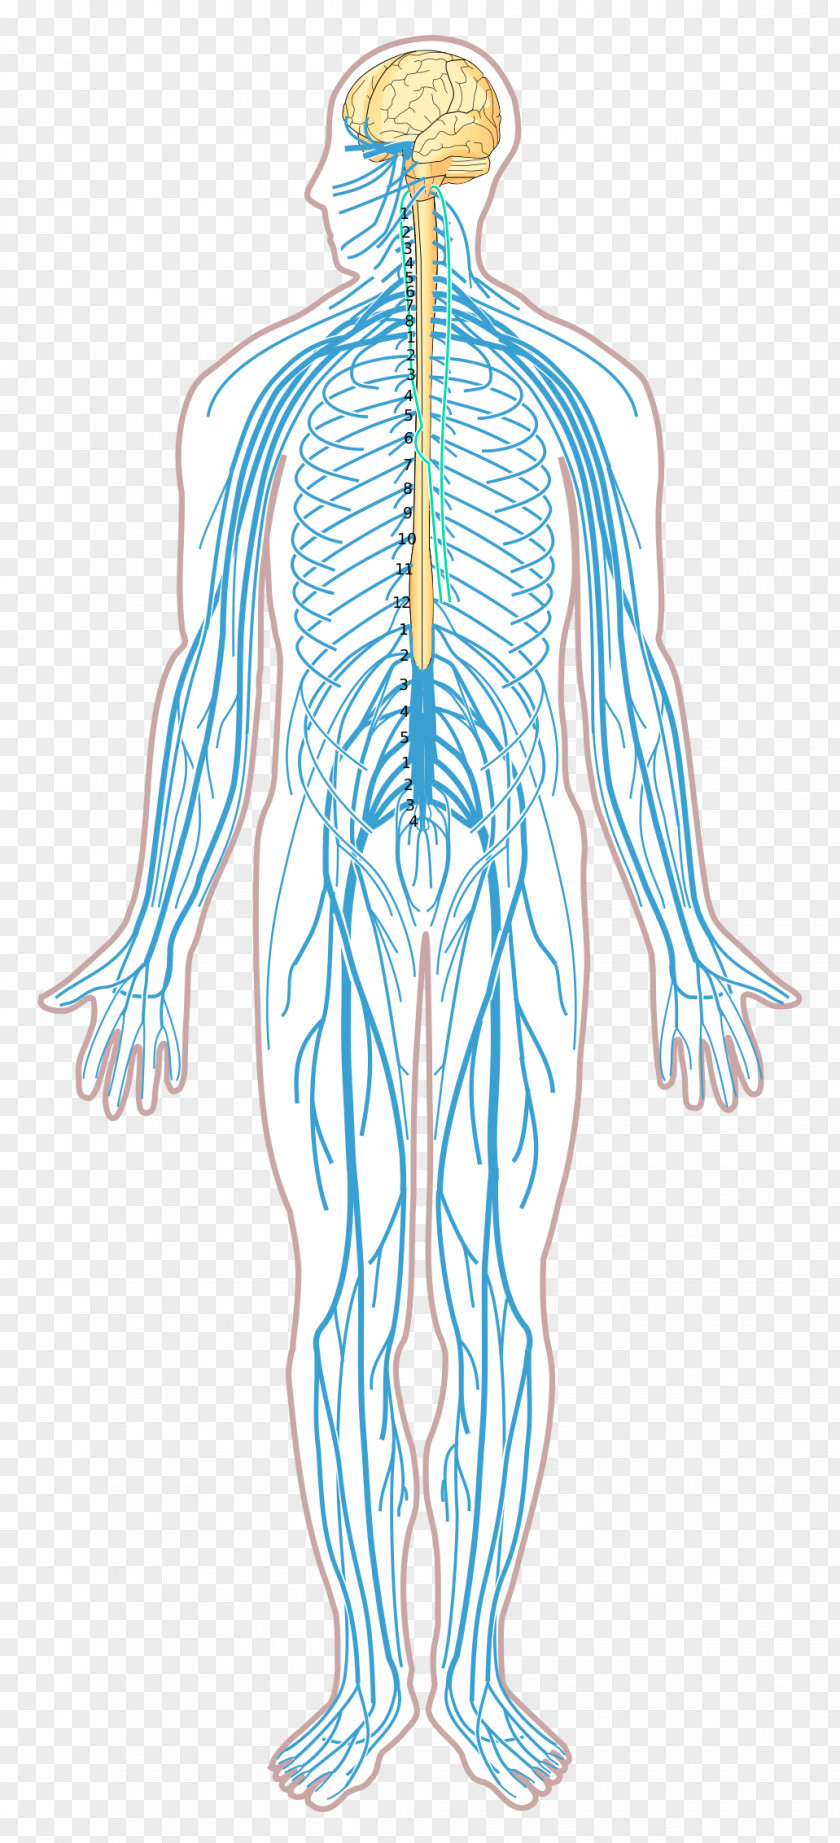 Nervous System Disease Nerve Diagram Human Body PNG